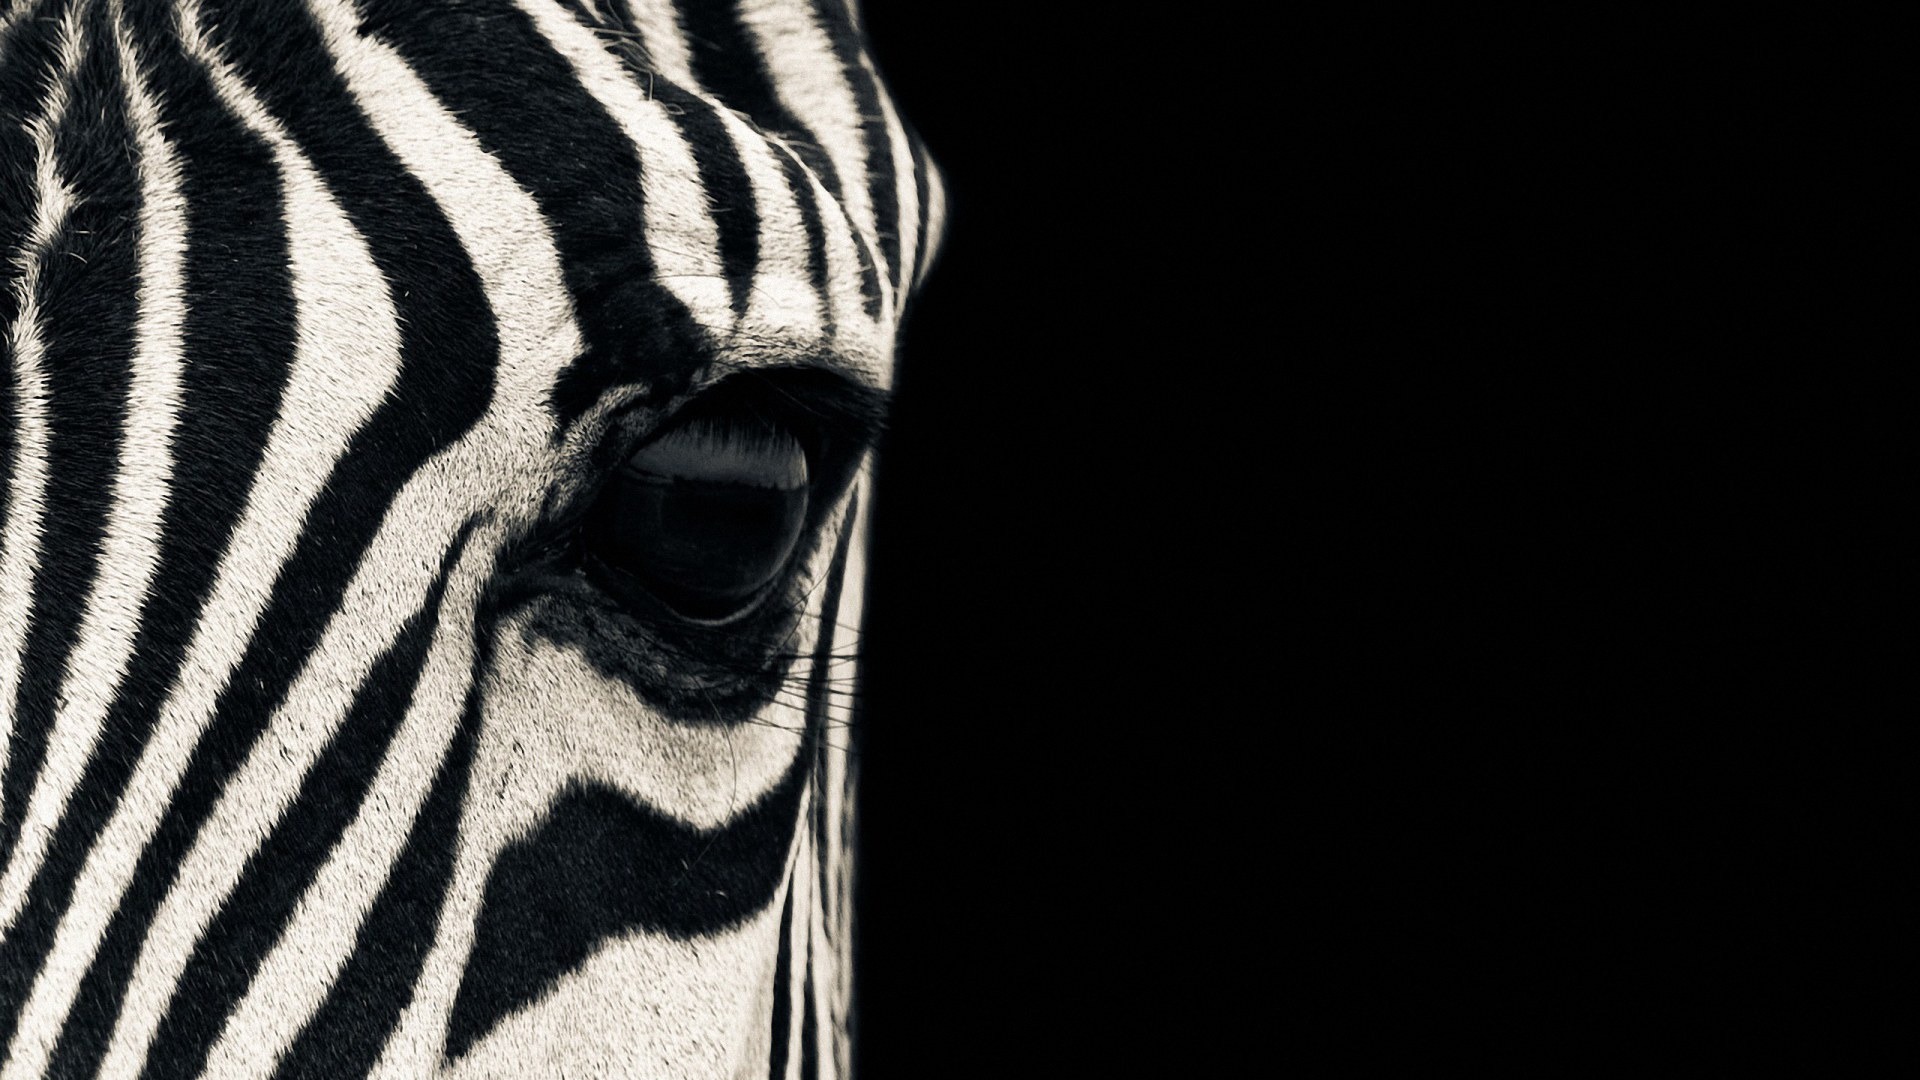 Zebra Wallpaper Pictures Image